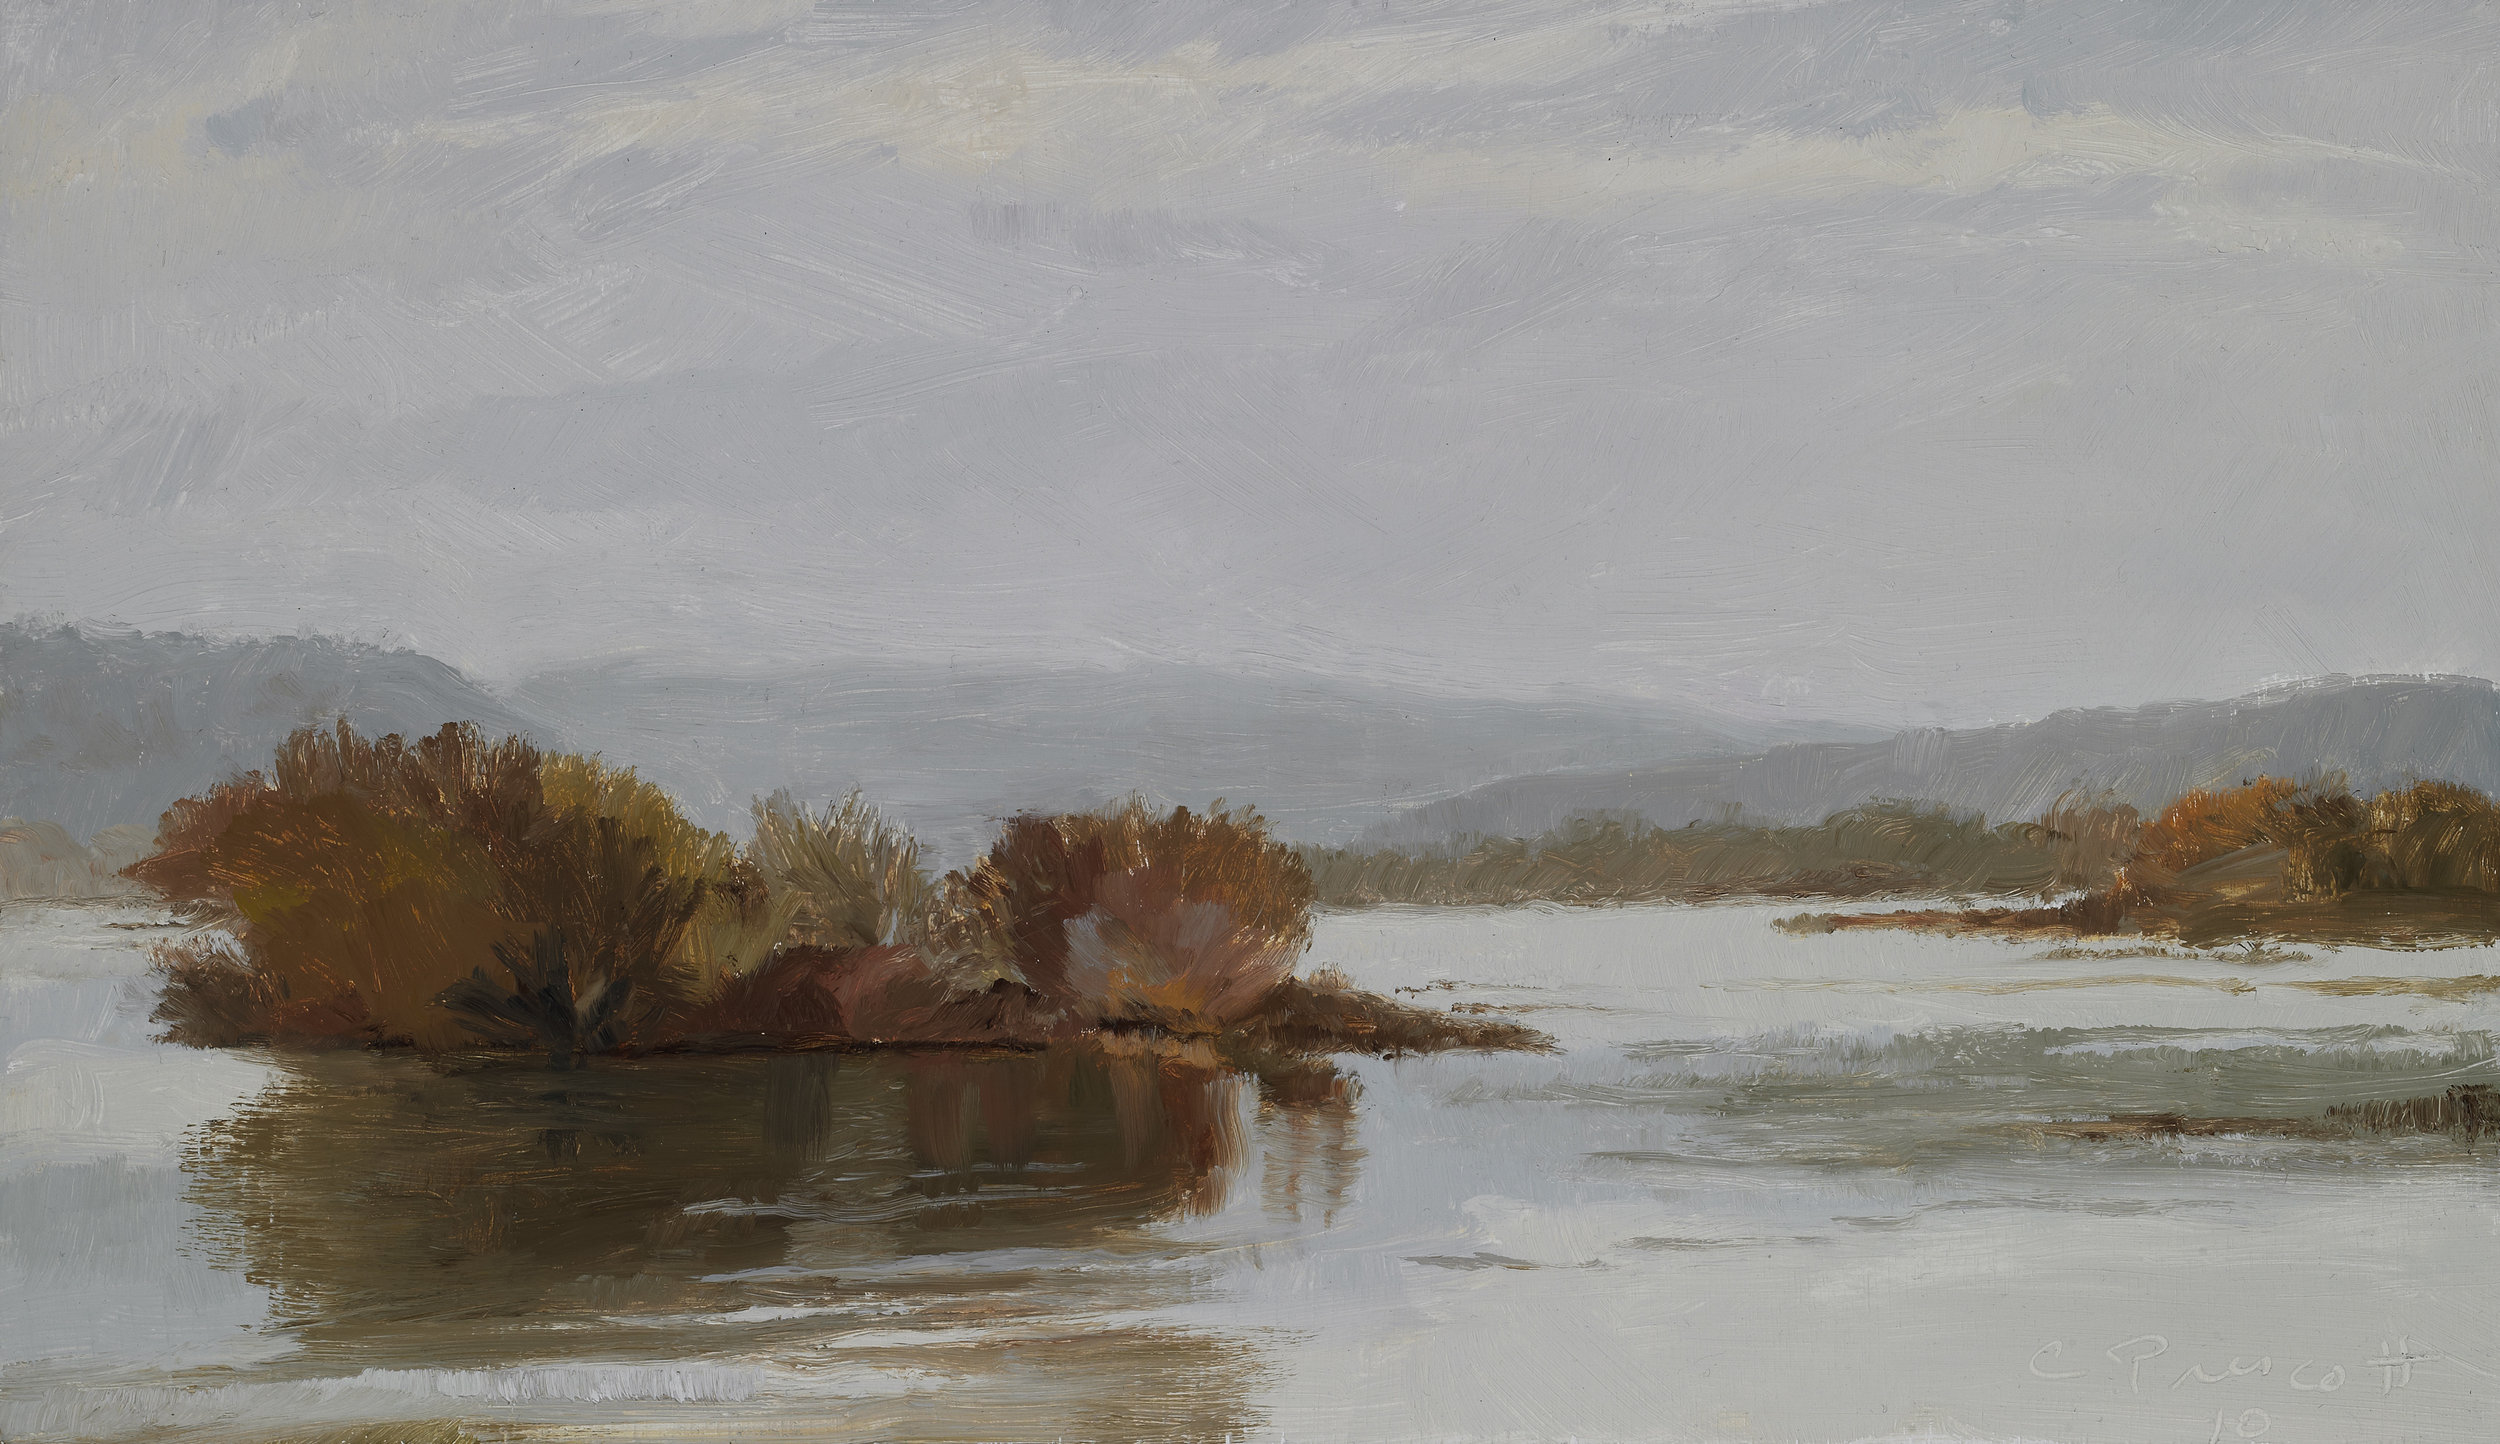   Susquehanna River , Oil on Wood Panel, 2010, 8 1/4" x 14 1/4" 